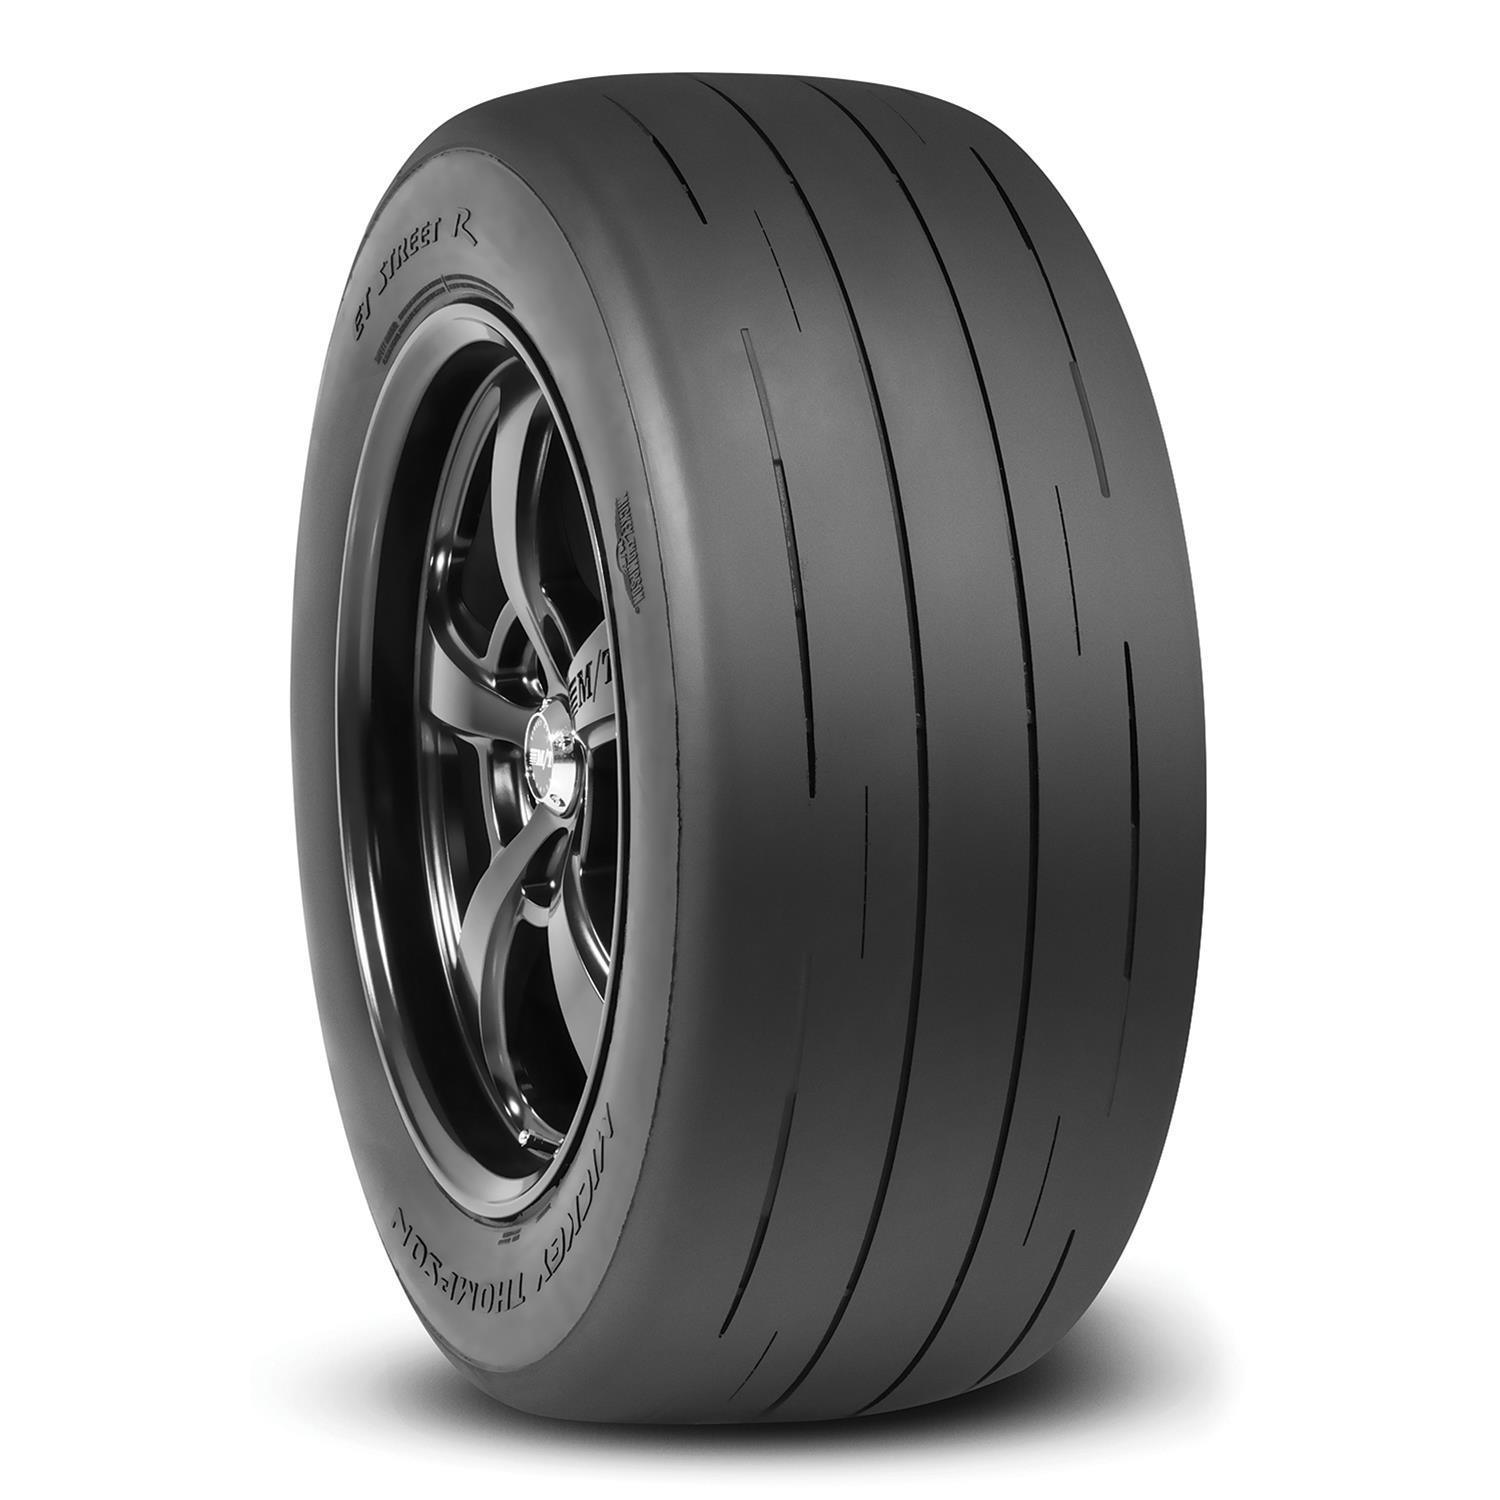 P275/40R17 ET Street R Tire - Burlile Performance Products